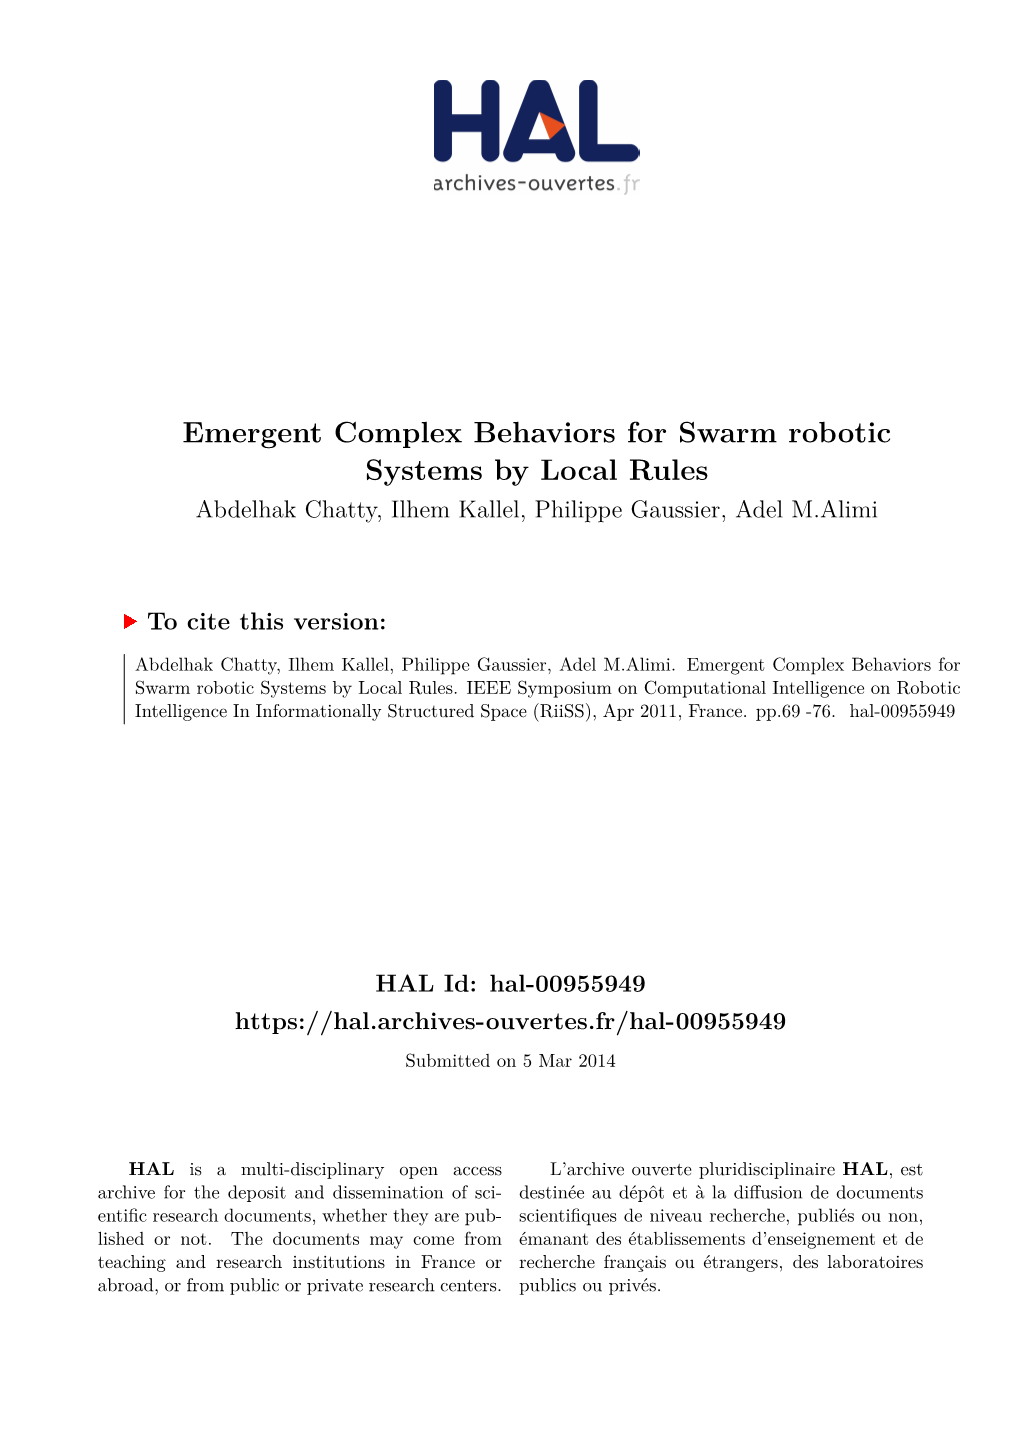 Emergent Complex Behaviors for Swarm Robotic Systems by Local Rules Abdelhak Chatty, Ilhem Kallel, Philippe Gaussier, Adel M.Alimi